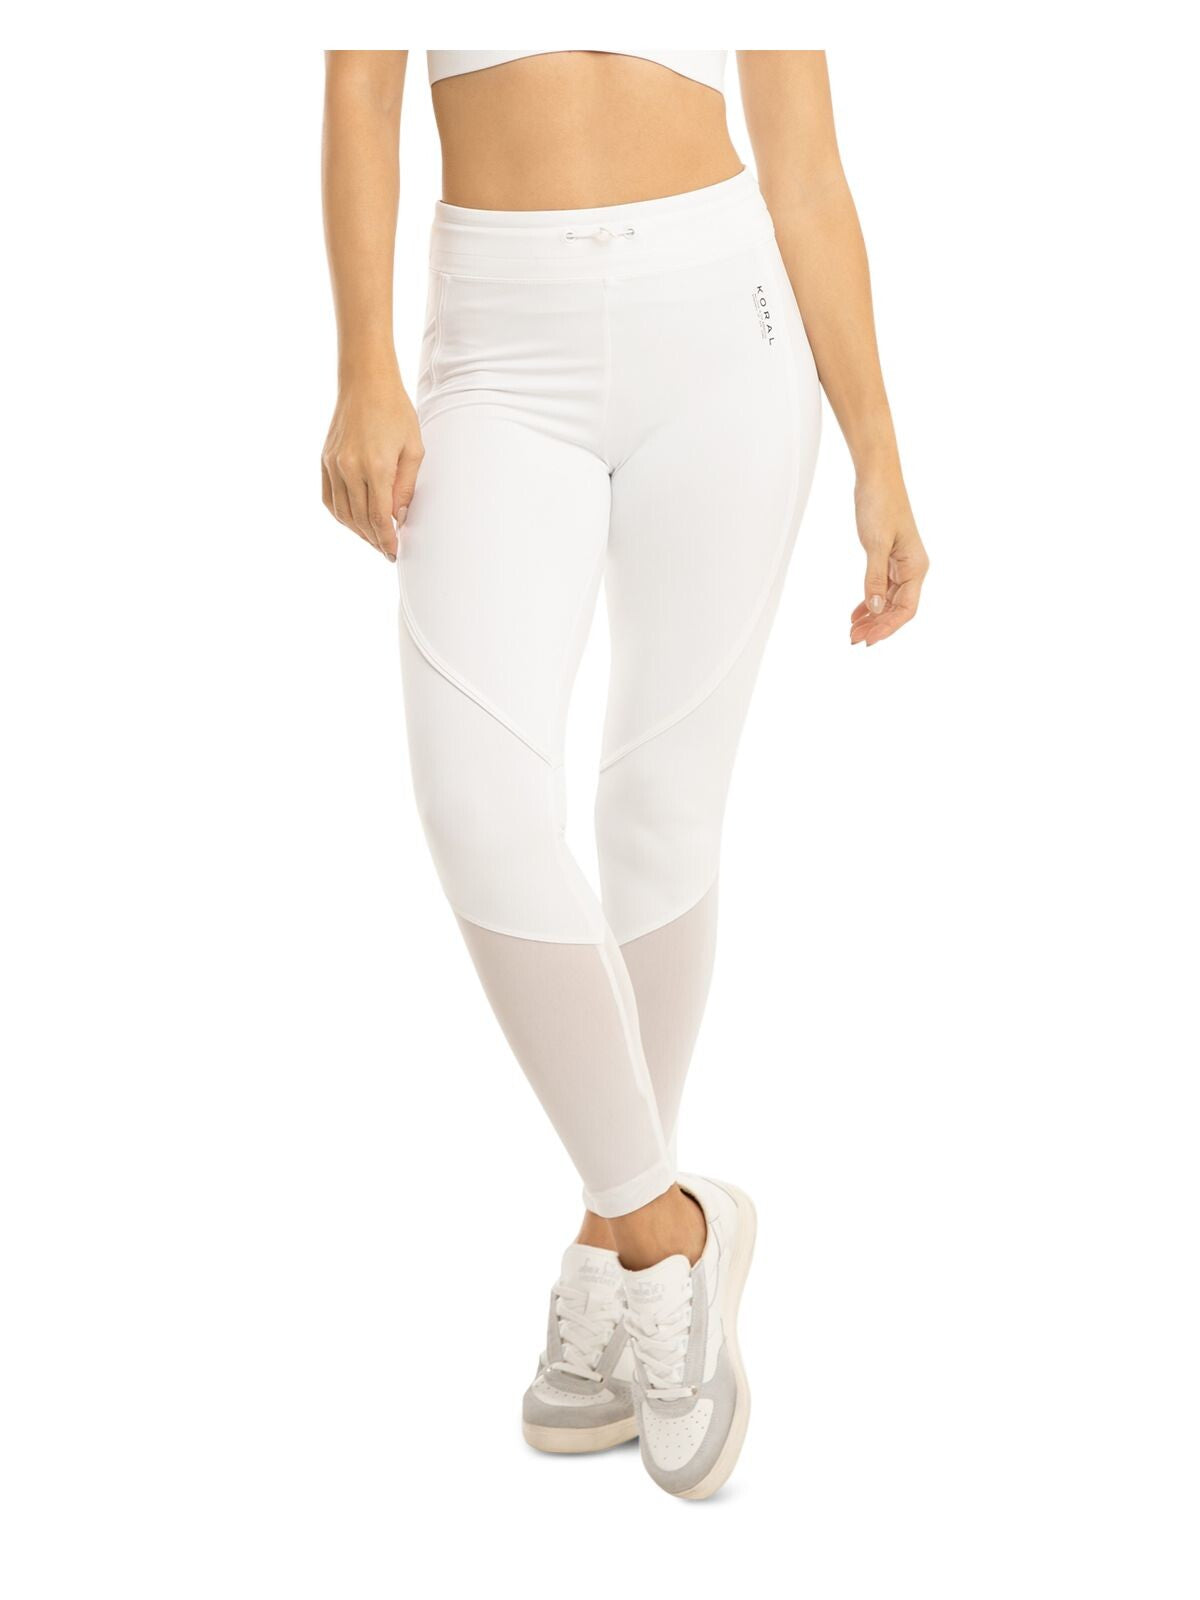 KORAL Womens White Stretch Active Wear High Waist Leggings XS